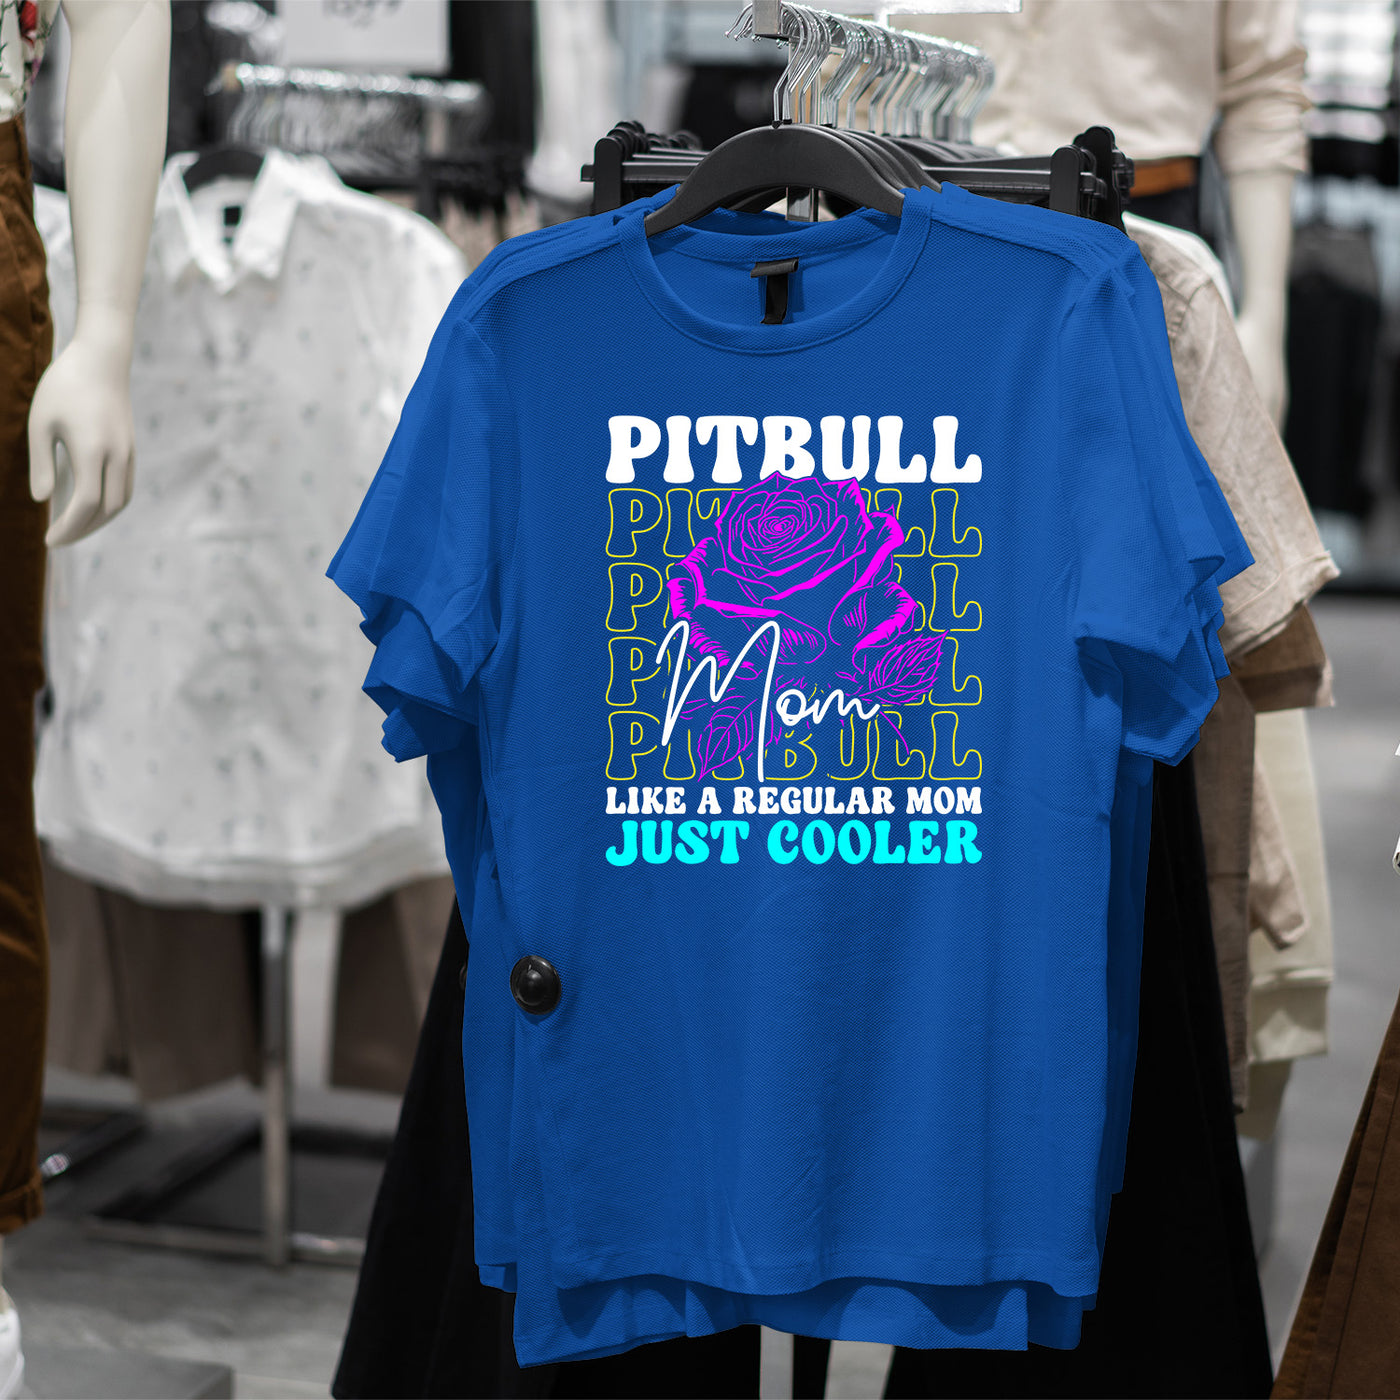 Cooler Pitbull Mom T-Shirt